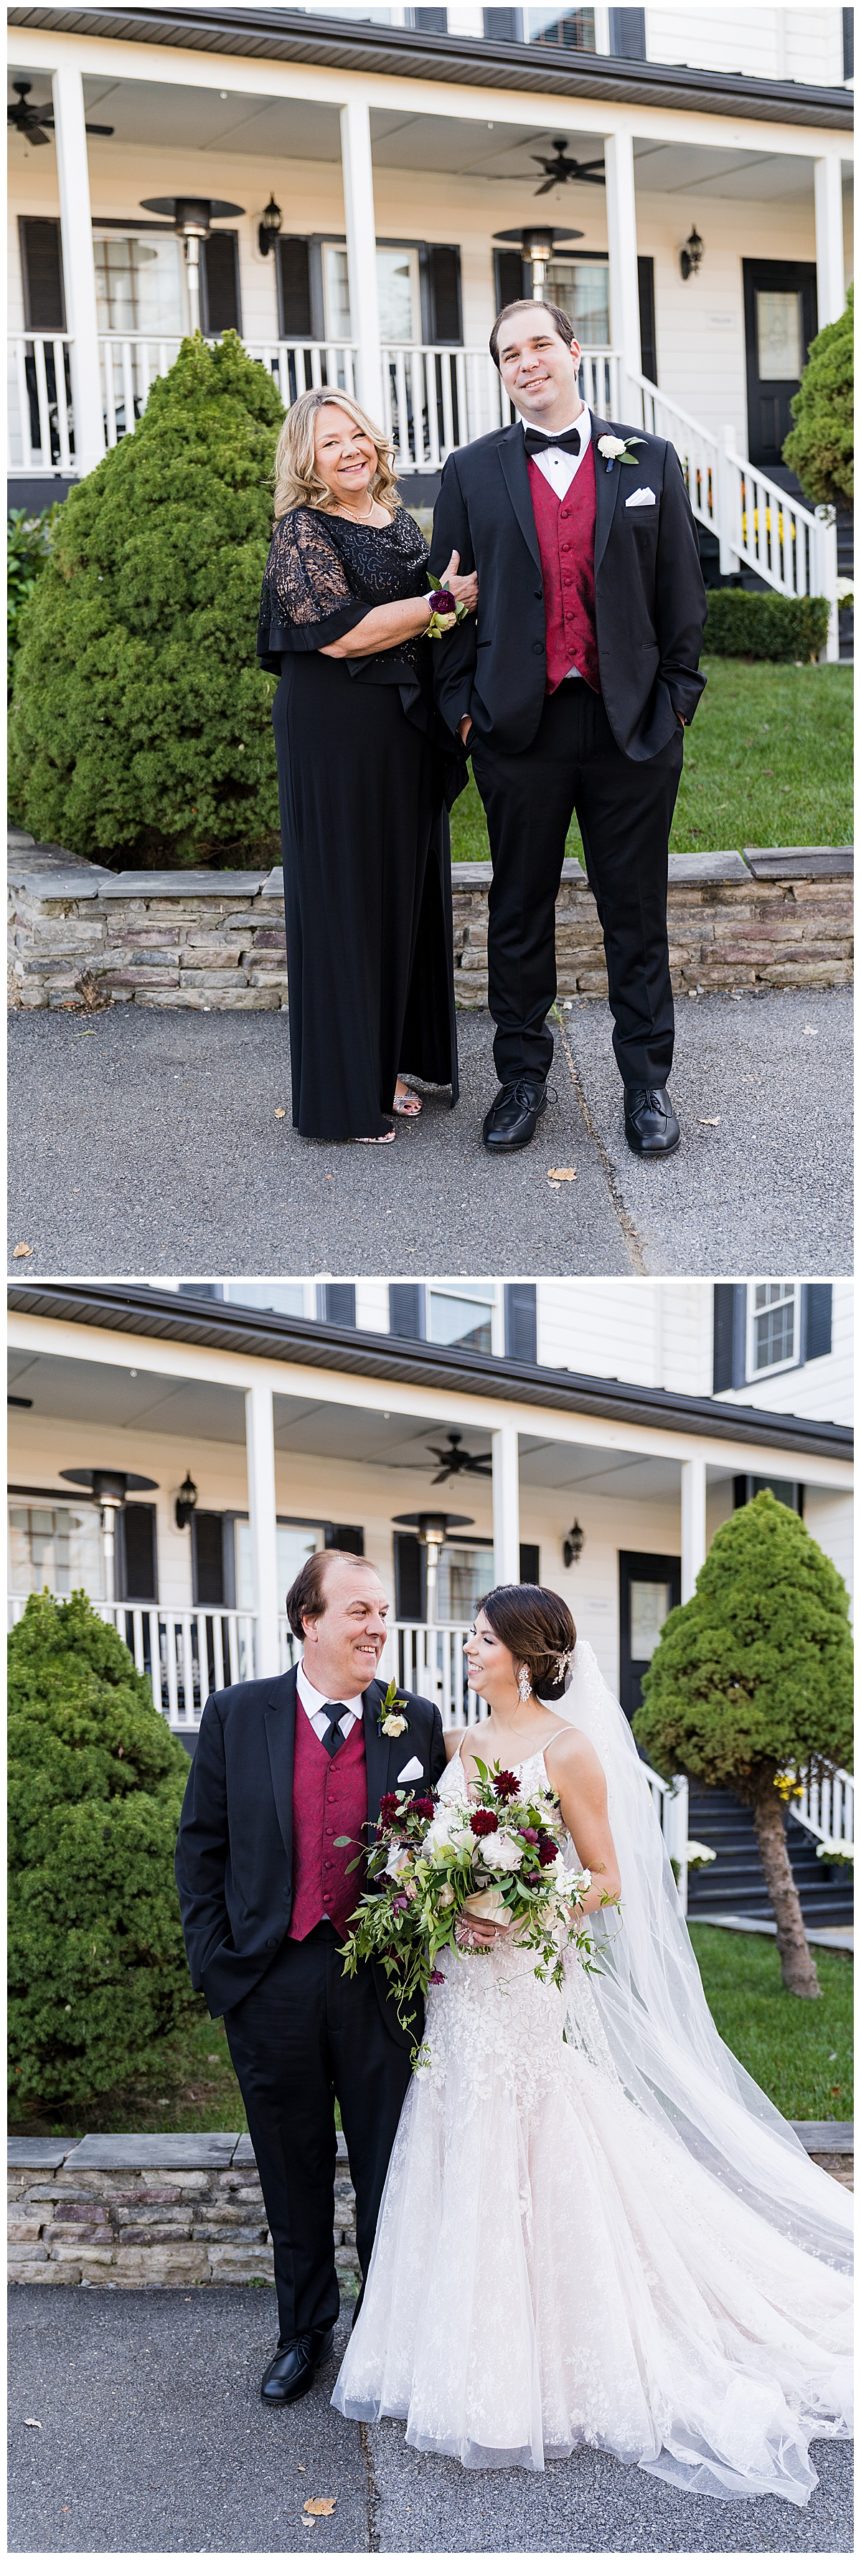 Stefanie Kamerman Photography - Jen and Matt - A Blush and Burgandy Themed Wedding - Manor at Airmont, Round Hill, Virginia_0051.jpg